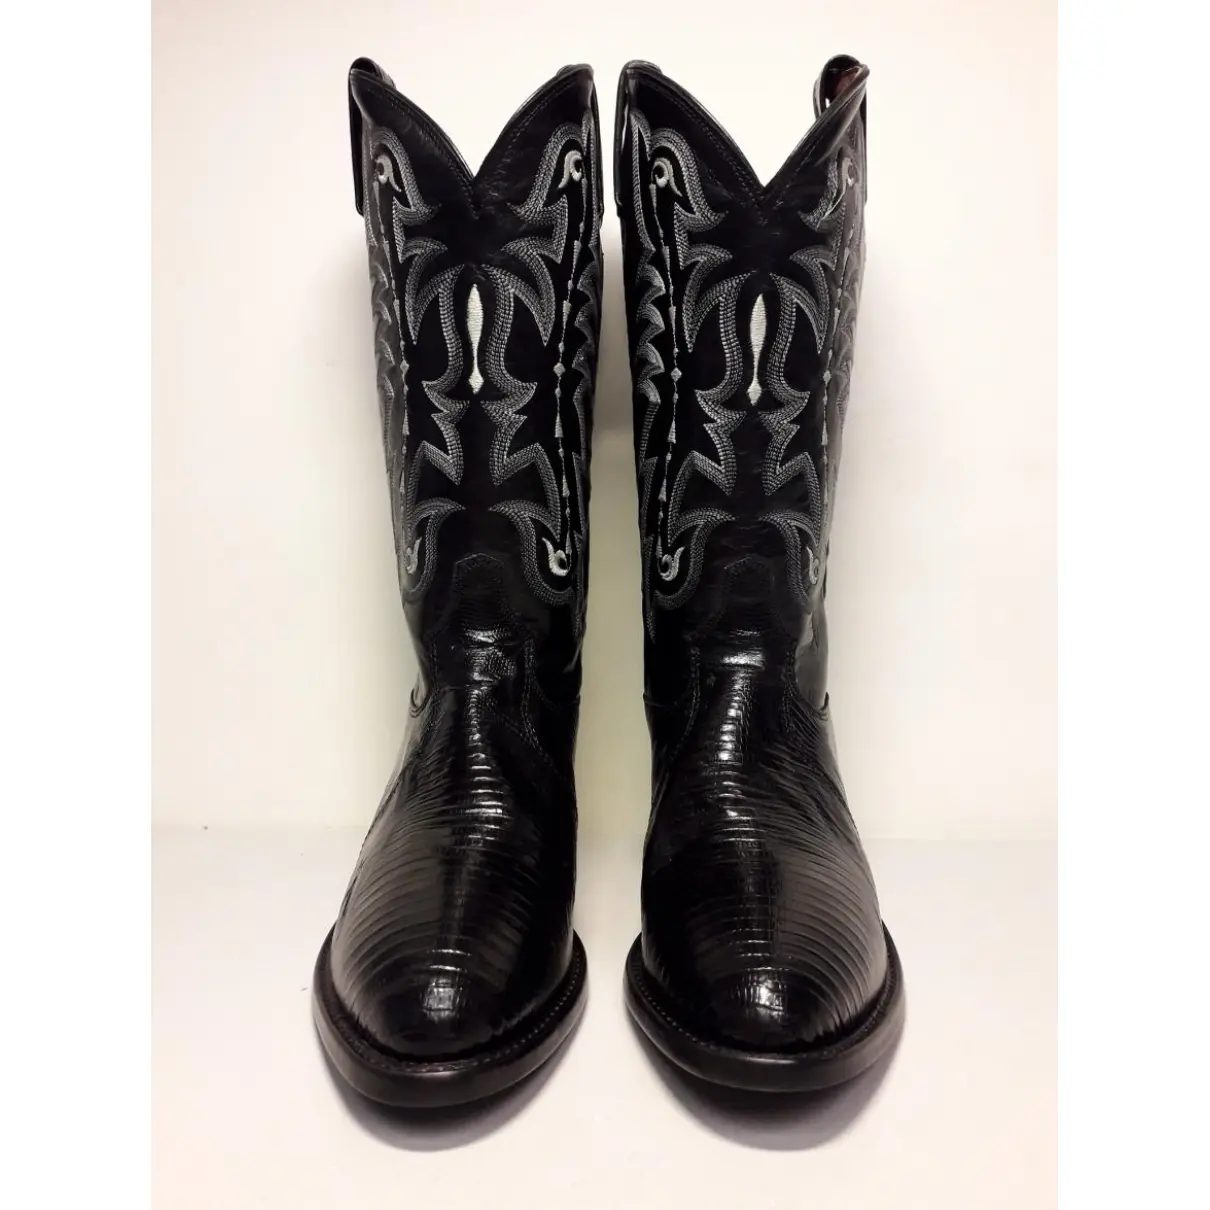 Buy Tony Lama Leather boots online